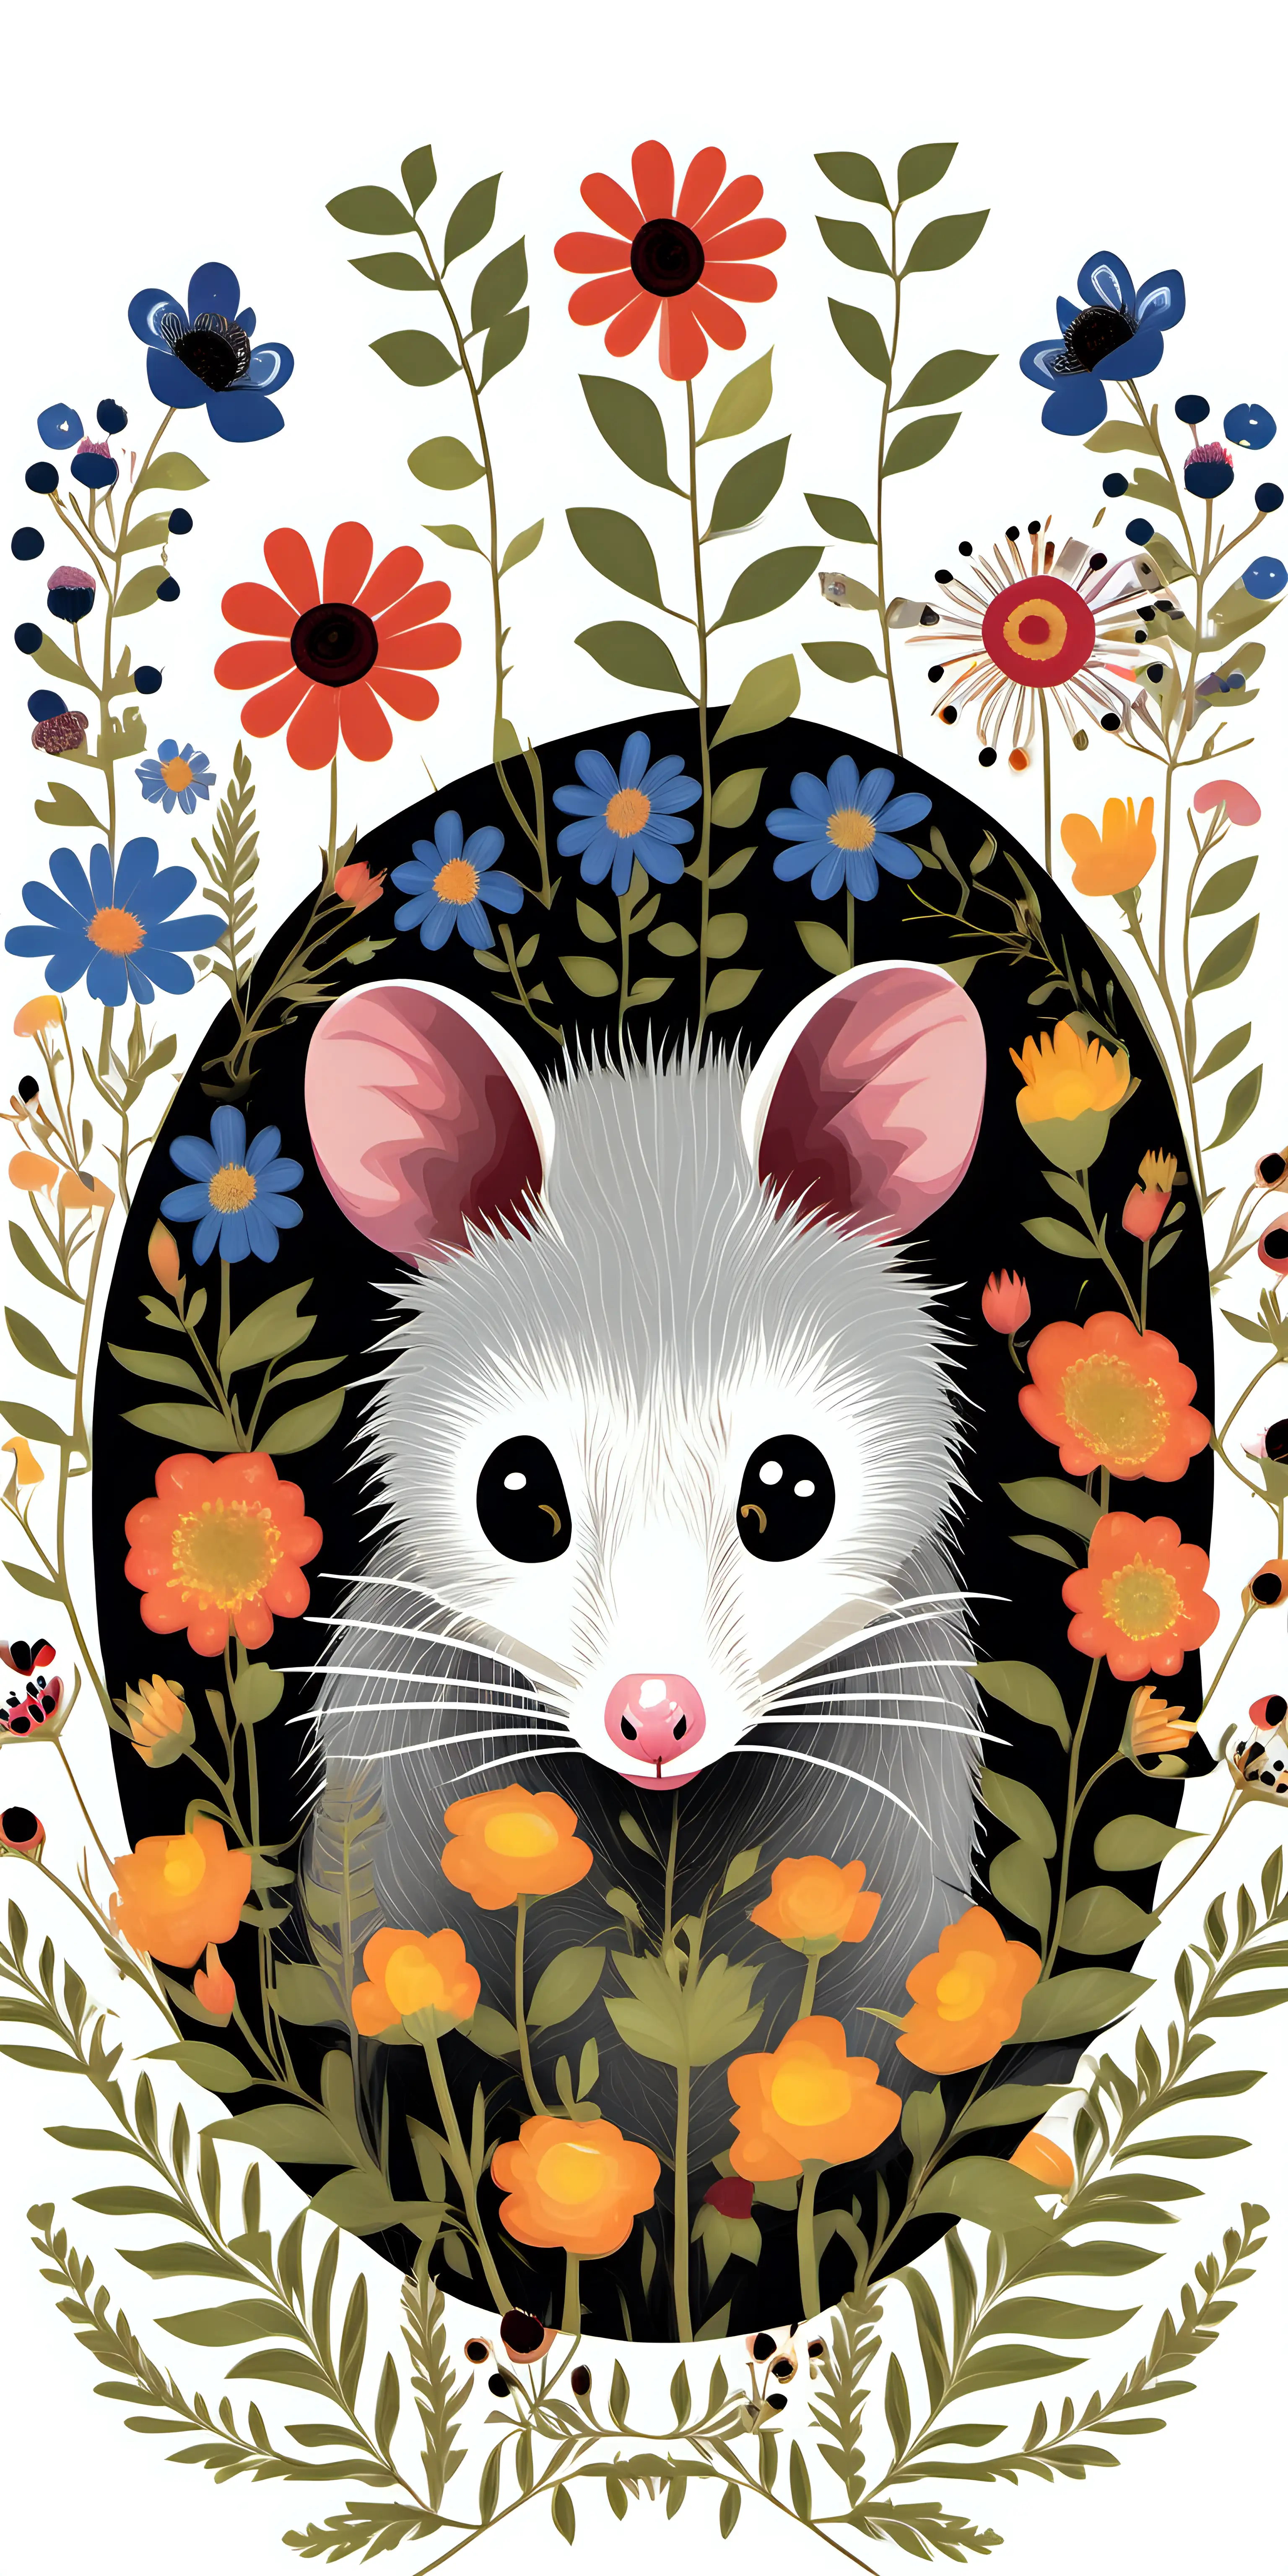 Charming Possum amidst Wildflowers Folk Art